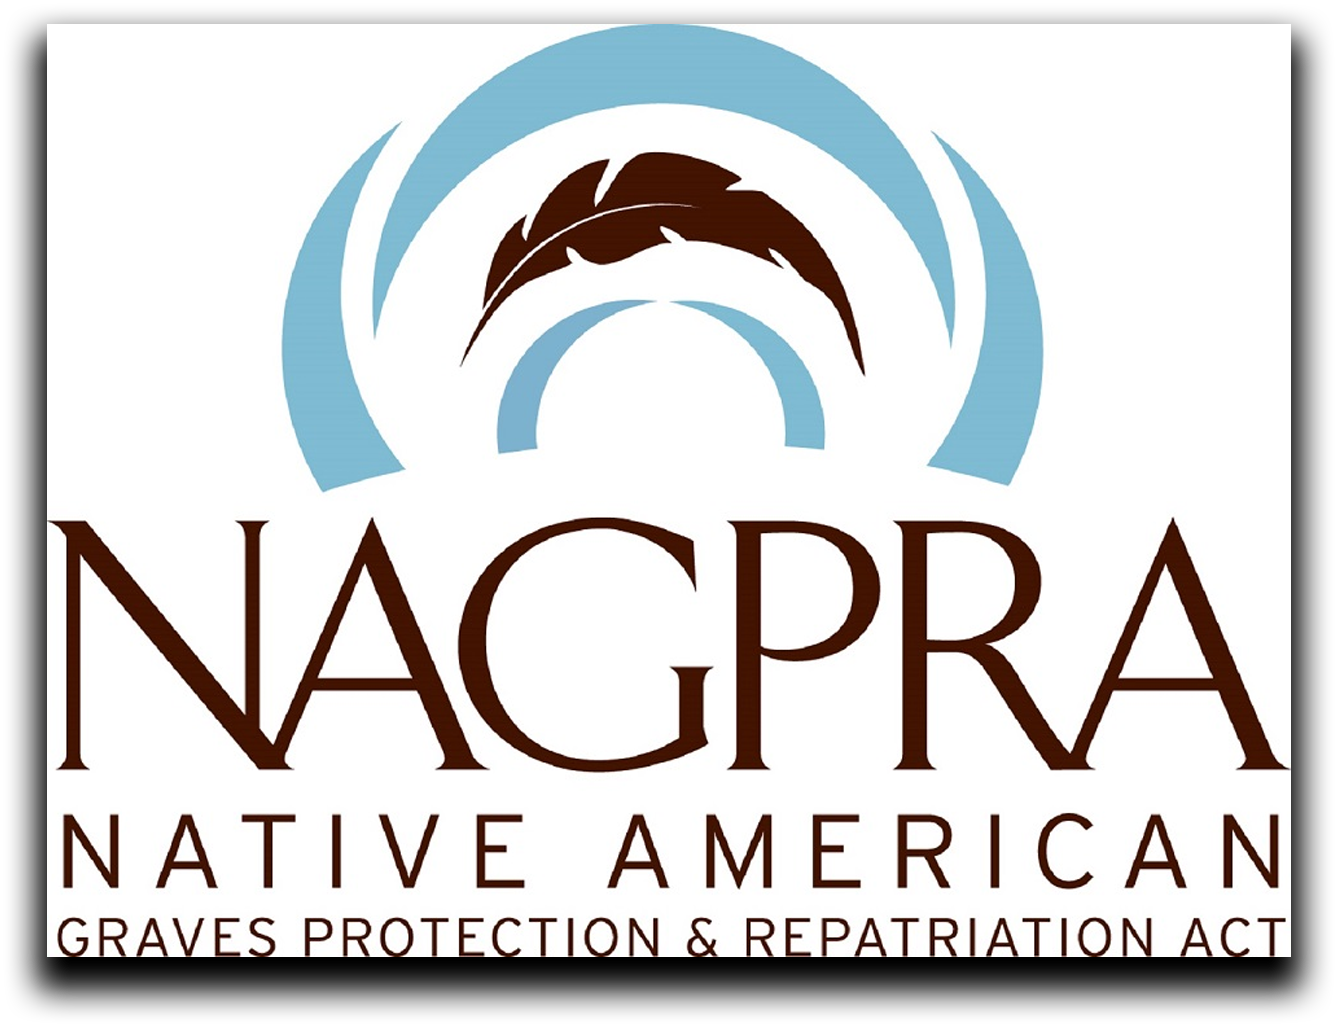 Native American Graves Protection & Repatriation Act (NAGPRA) logo